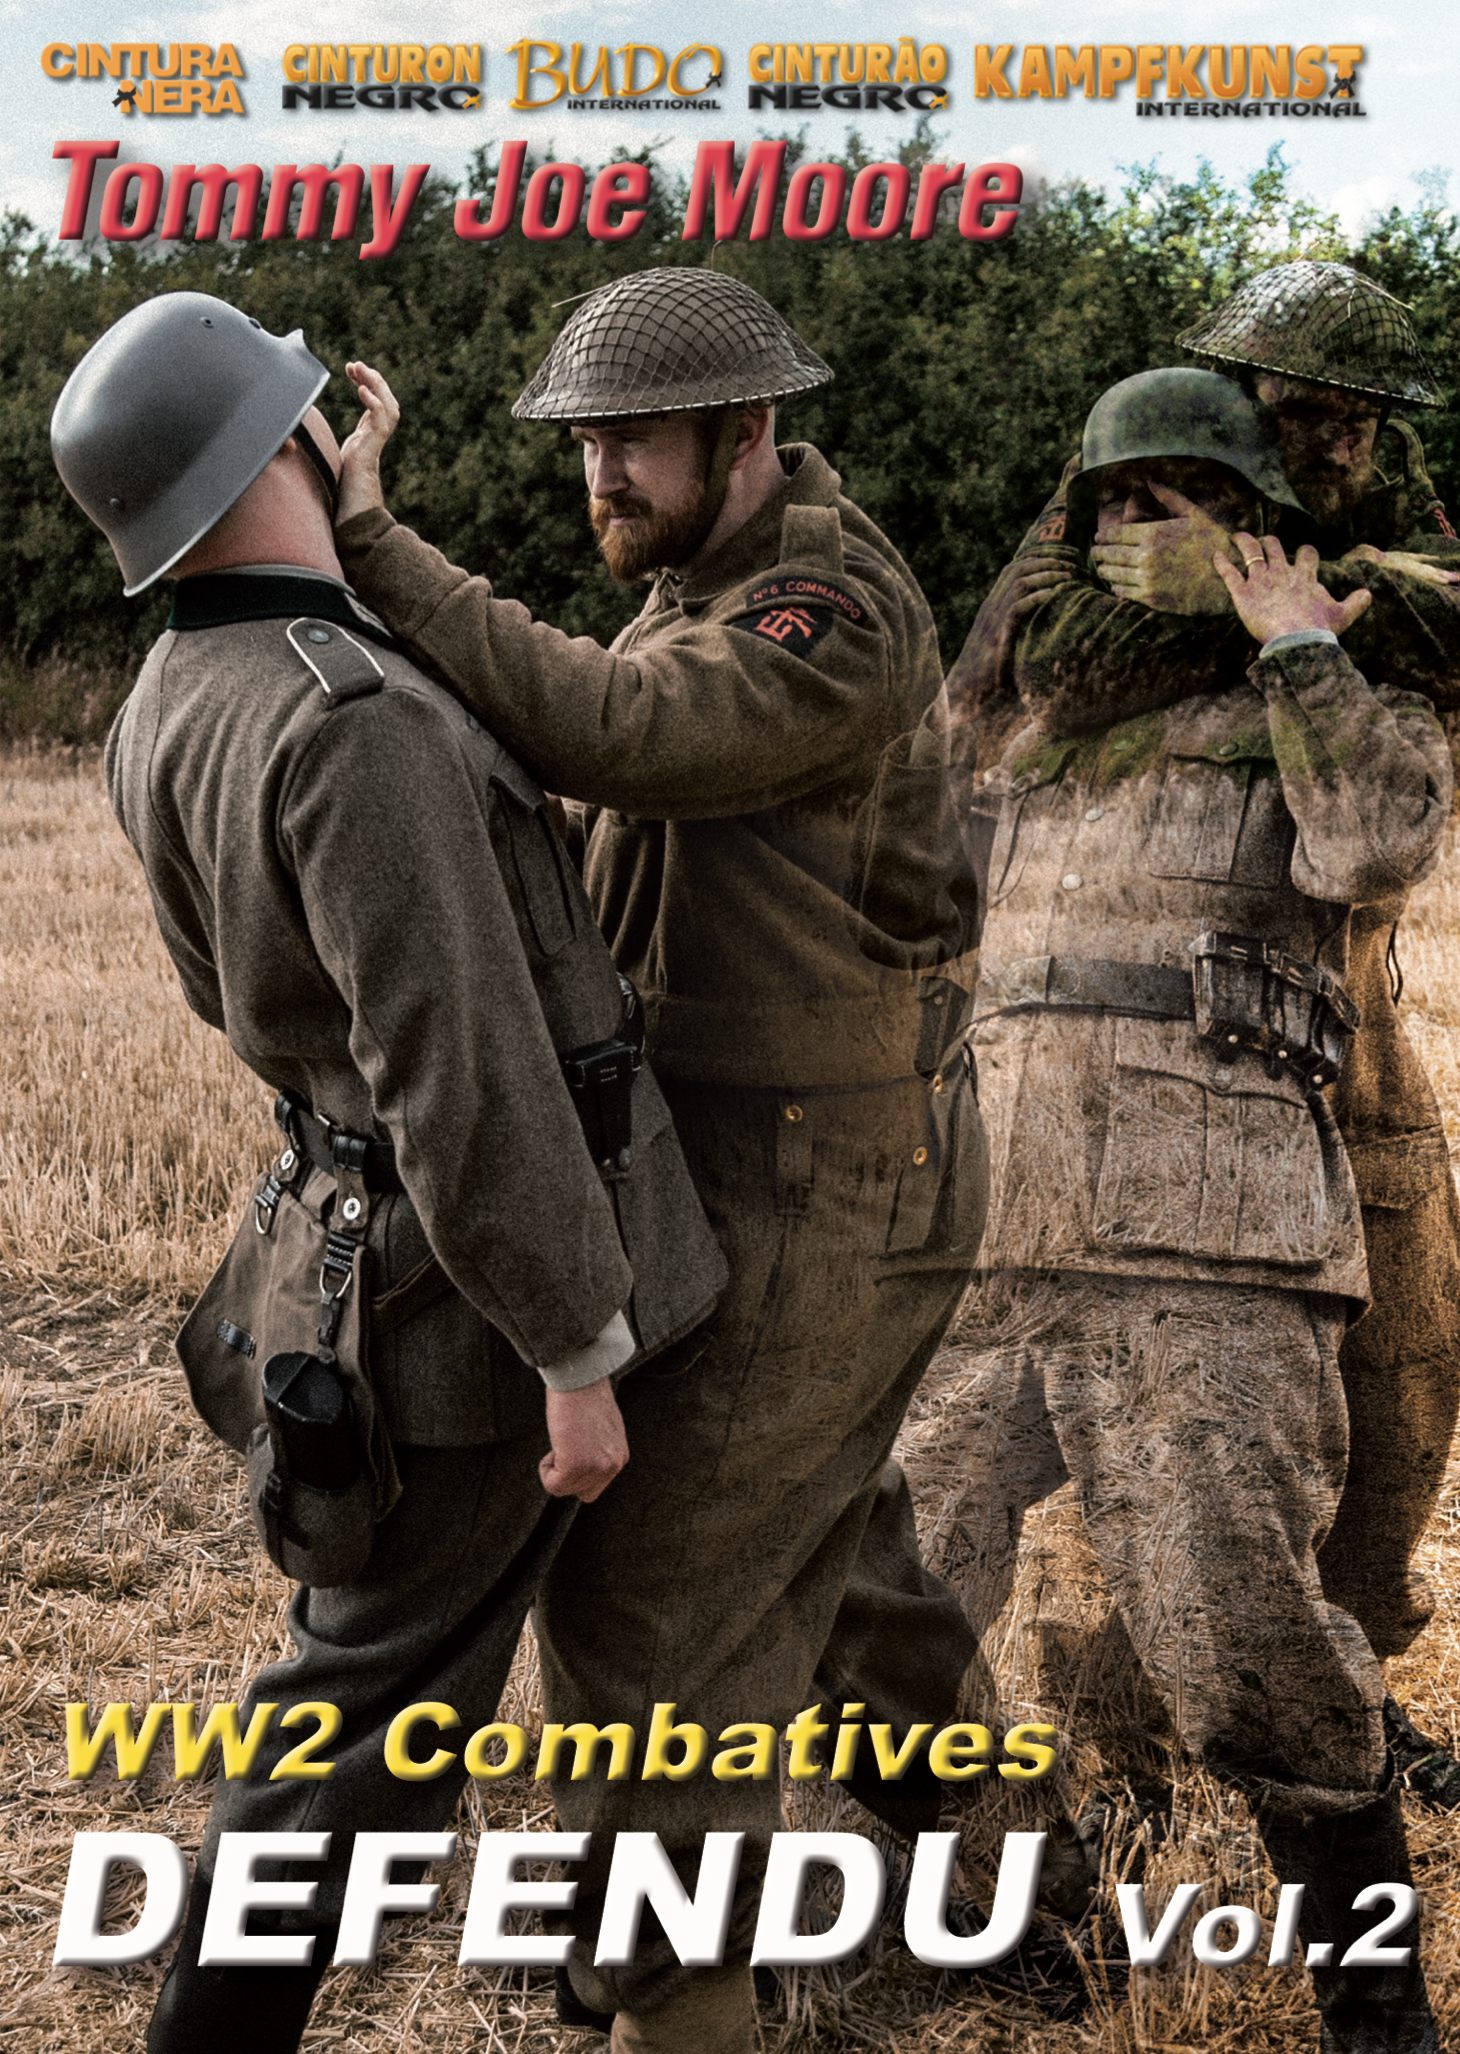 Defendu WW2 Combatives DVD 2 by Tommy Joe Moore